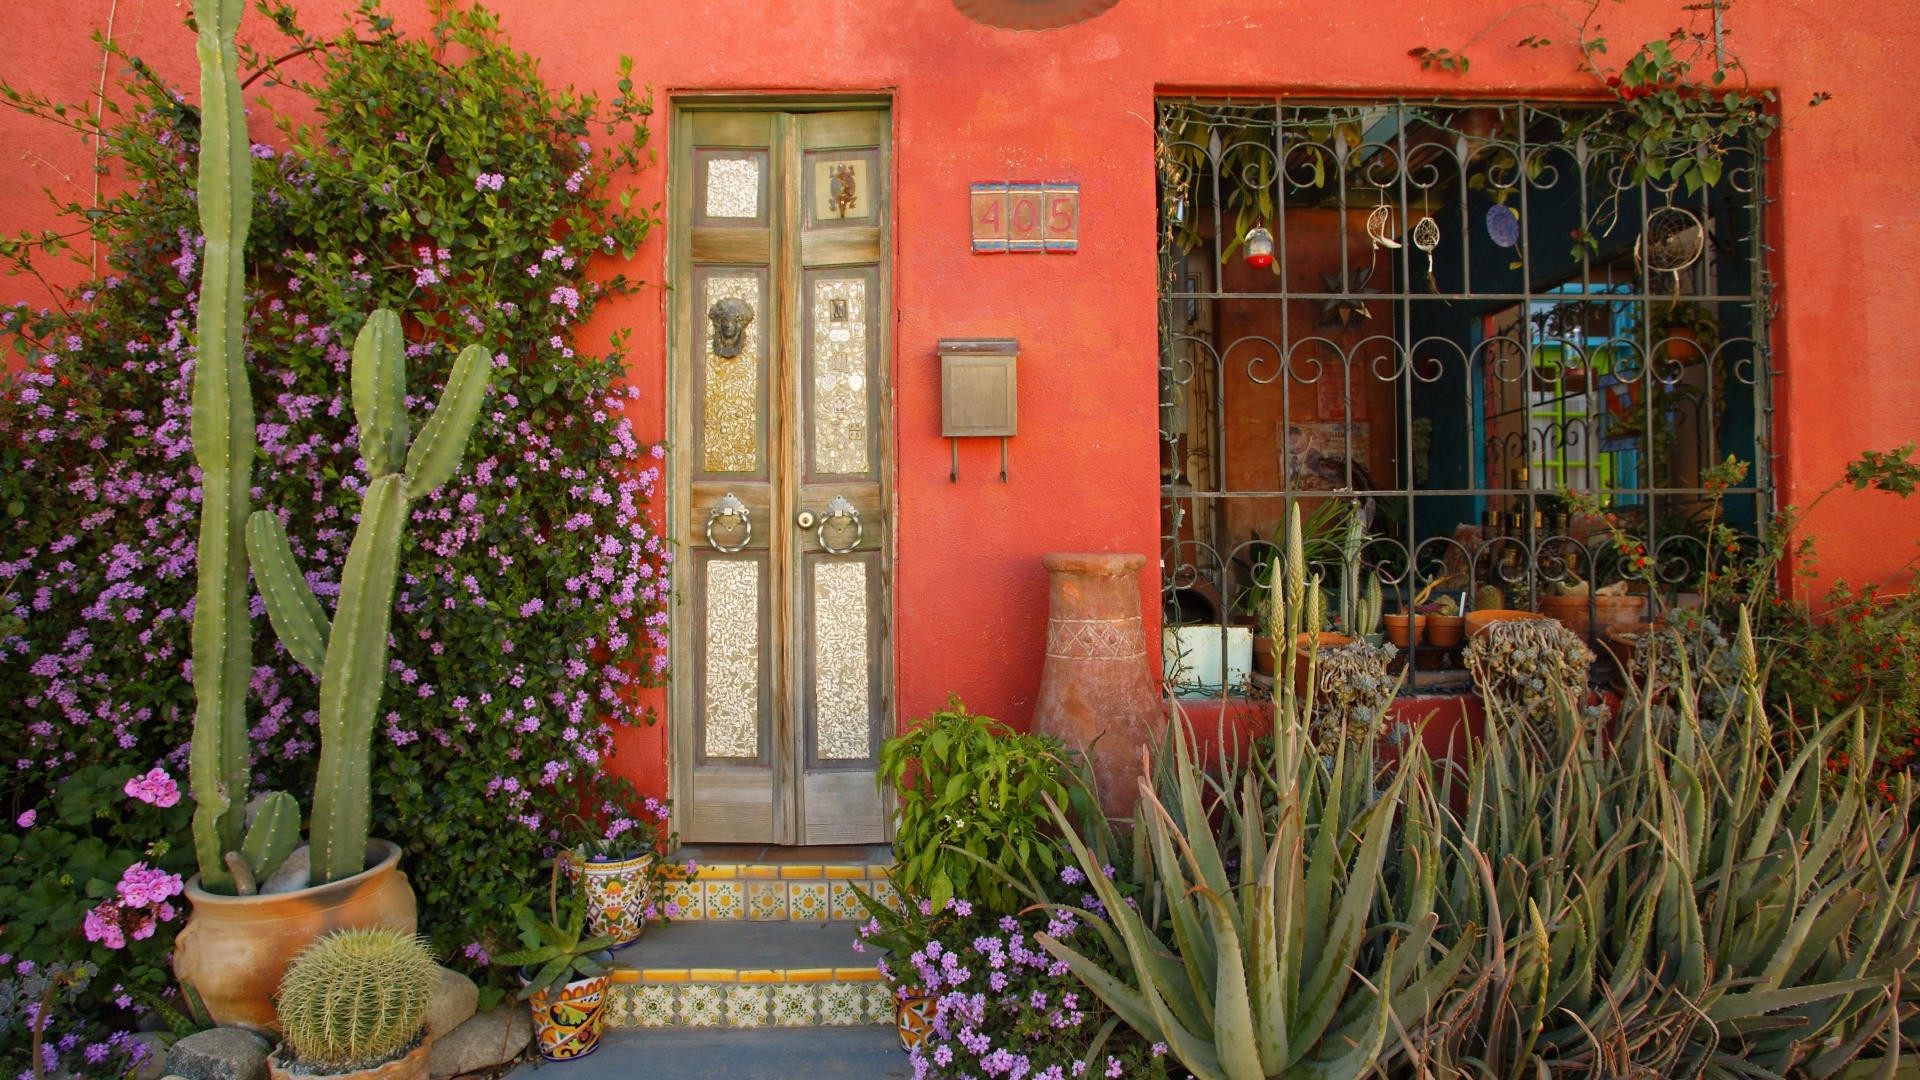 1920x1080 Houses - Historic Home Tuscon Arizona Restored Tucson House Cactus Window  Door Free Desktop Wallpaper for